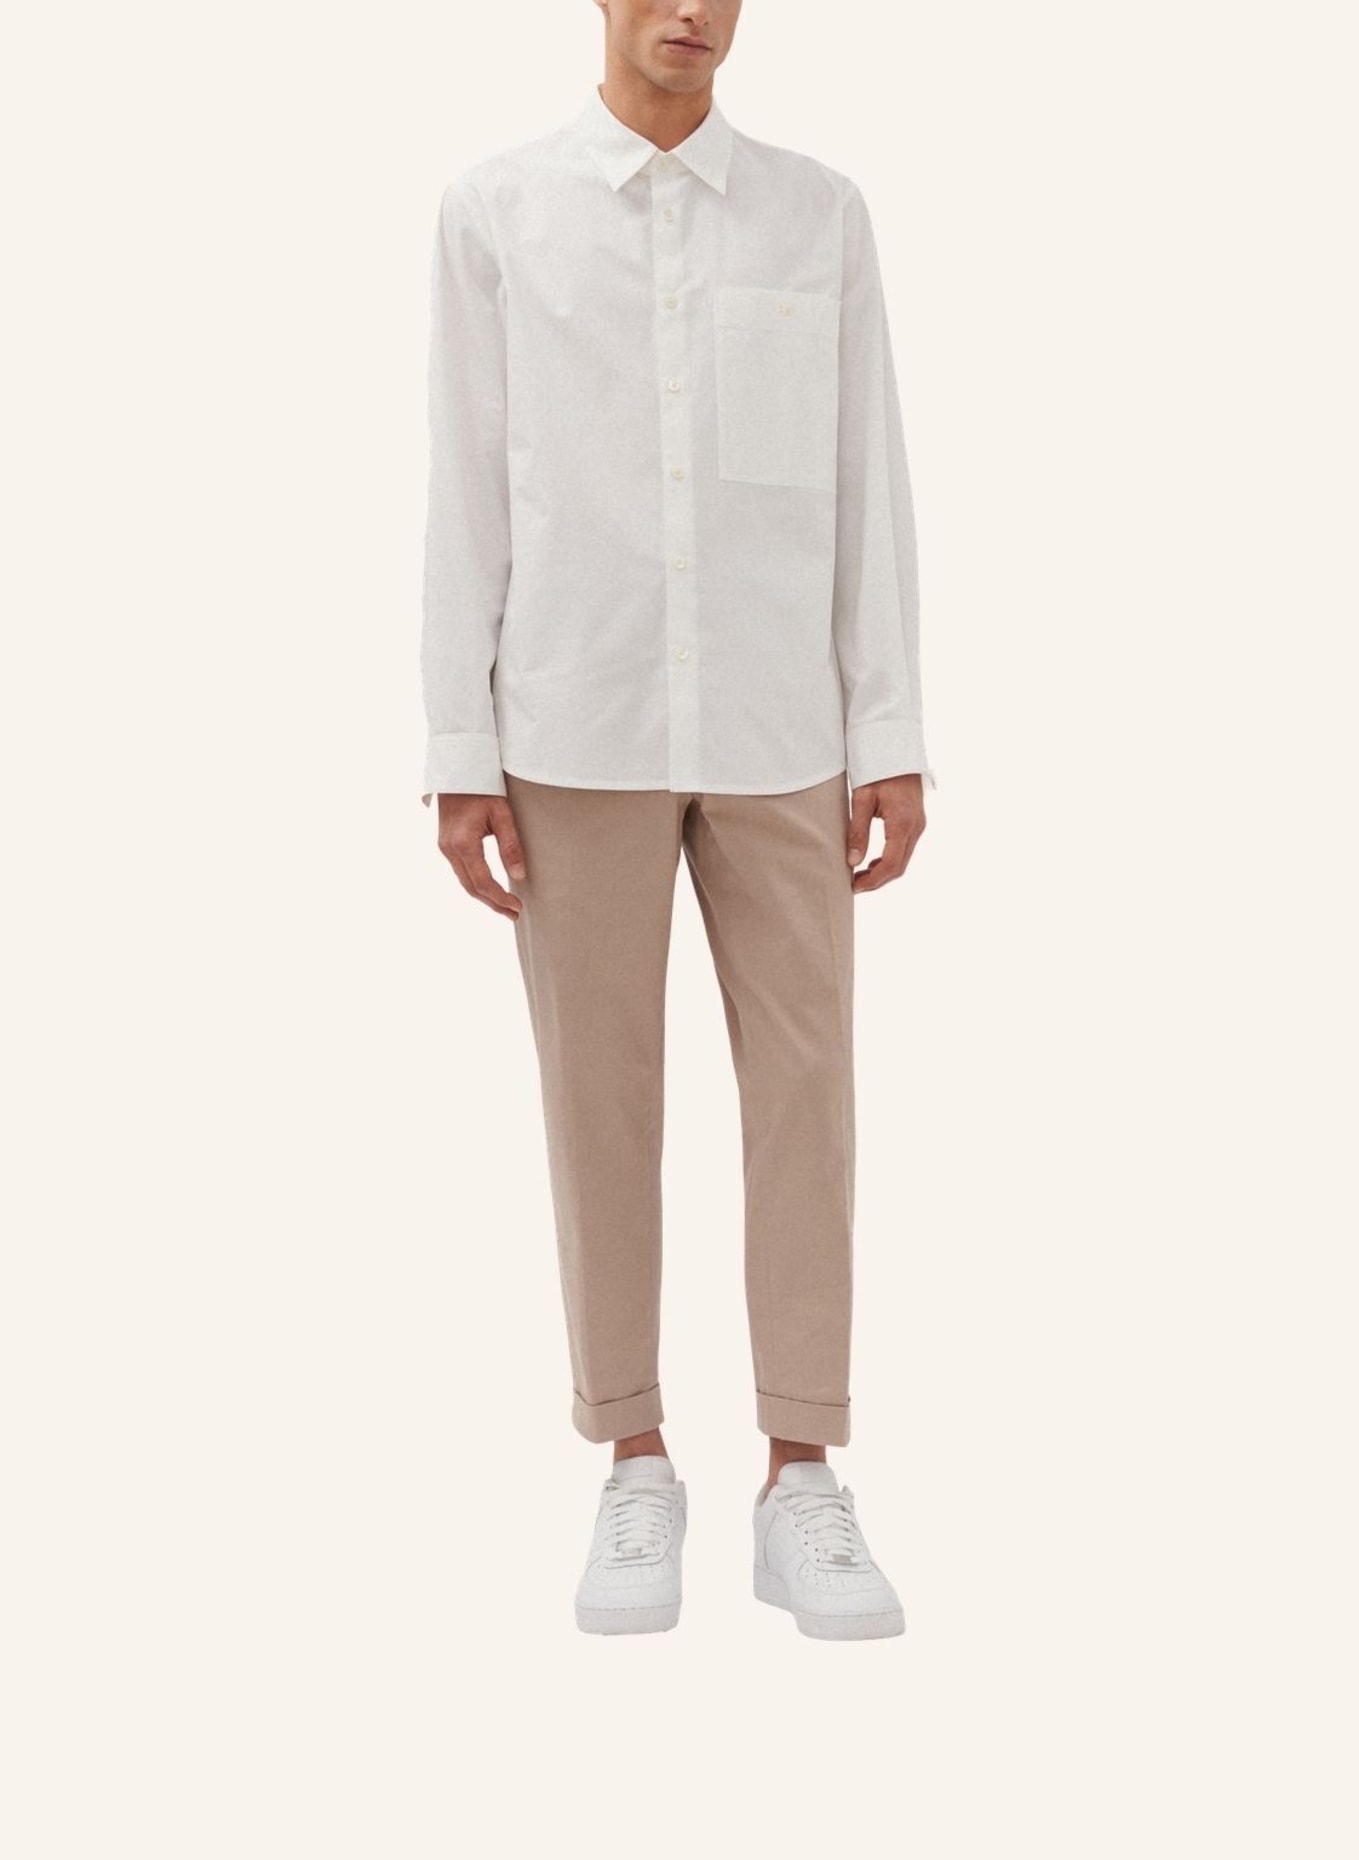 studio seidensticker Casual Hemd, Hemd Regular Fit, Farbe: WEISS (Bild 4)